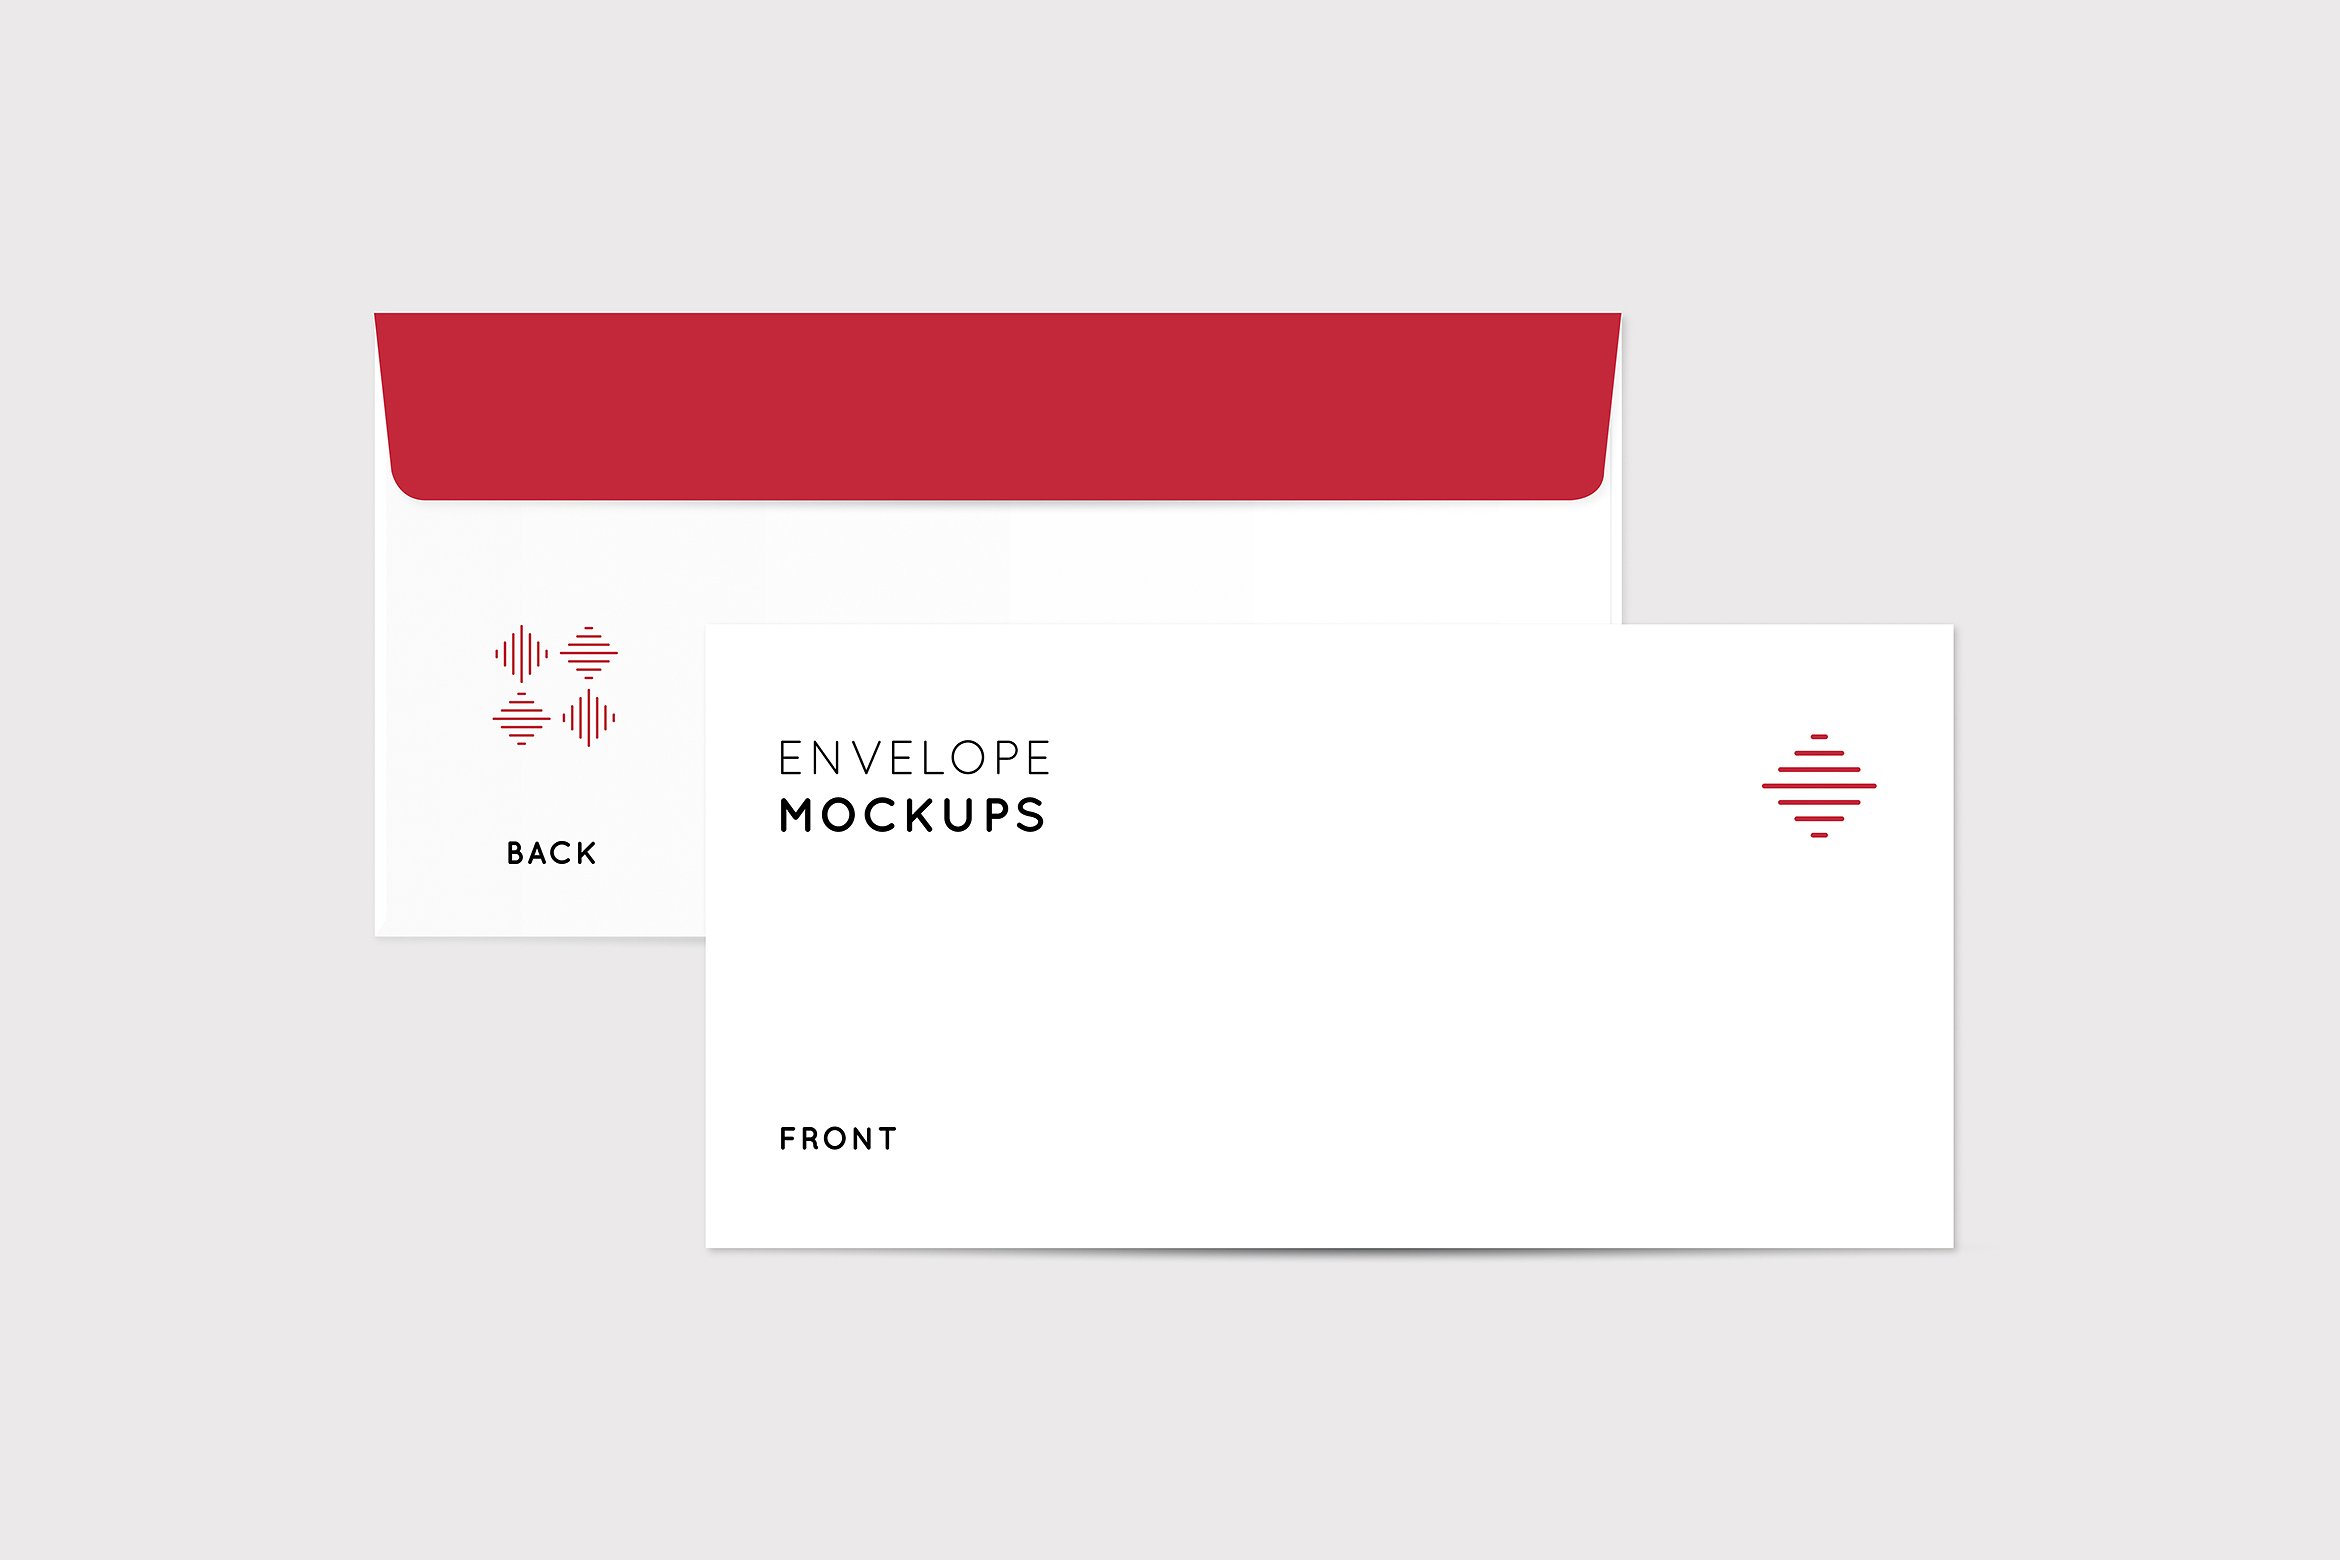 An envelope mockup templates